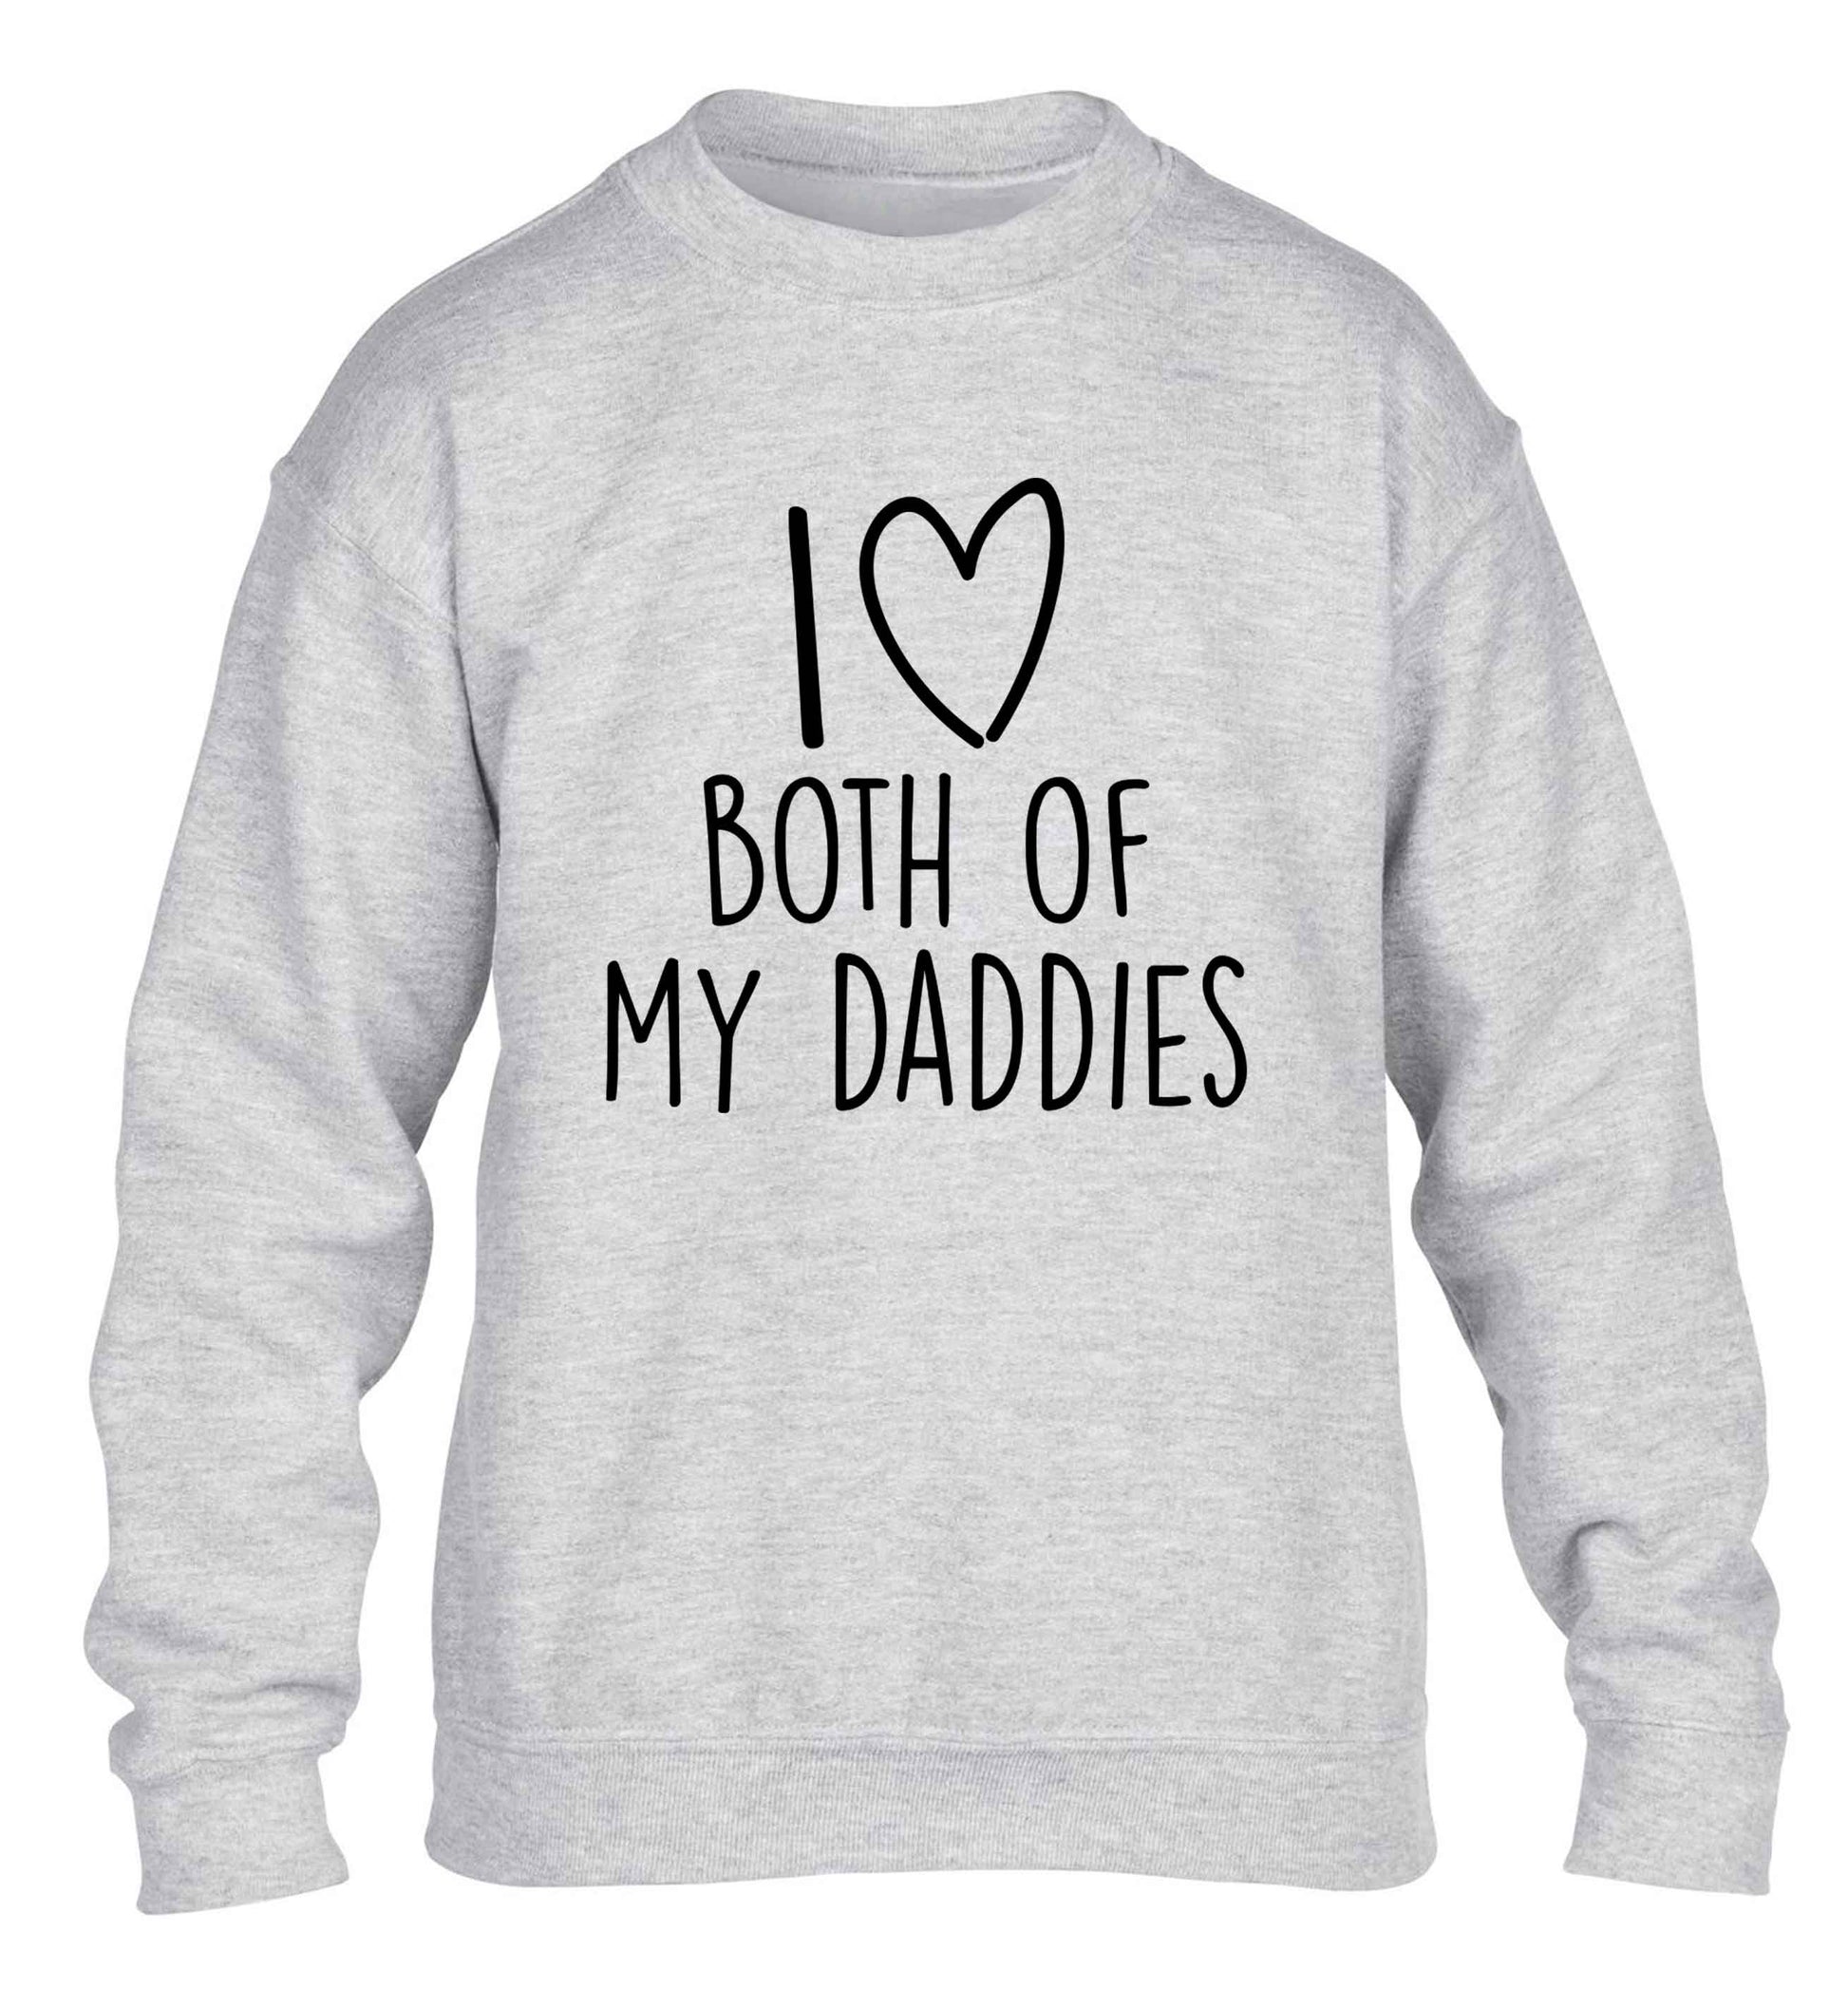 I love both of my daddies children's grey sweater 12-13 Years